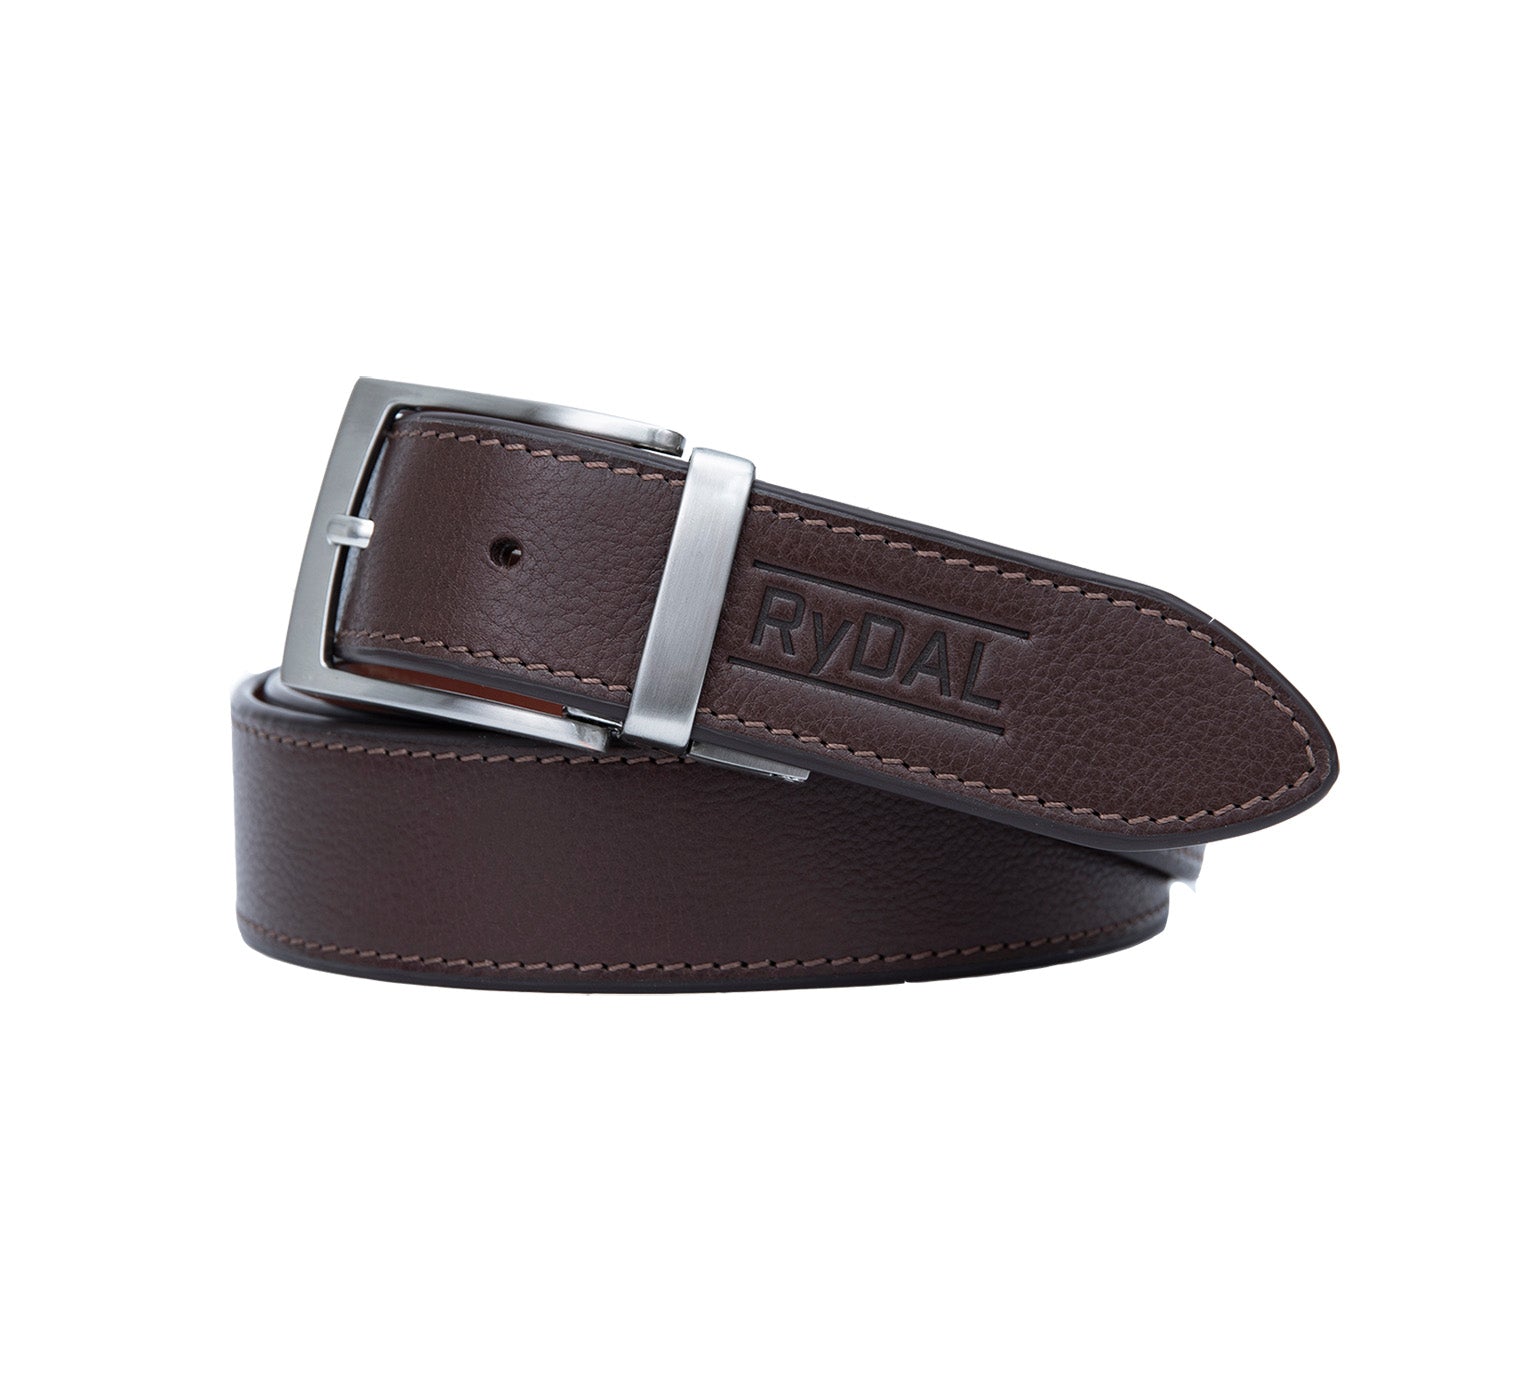 Firenze Mens Reversible Leather Belt from Rydal in 'Dark Brown/Rust' showing dark brown. 